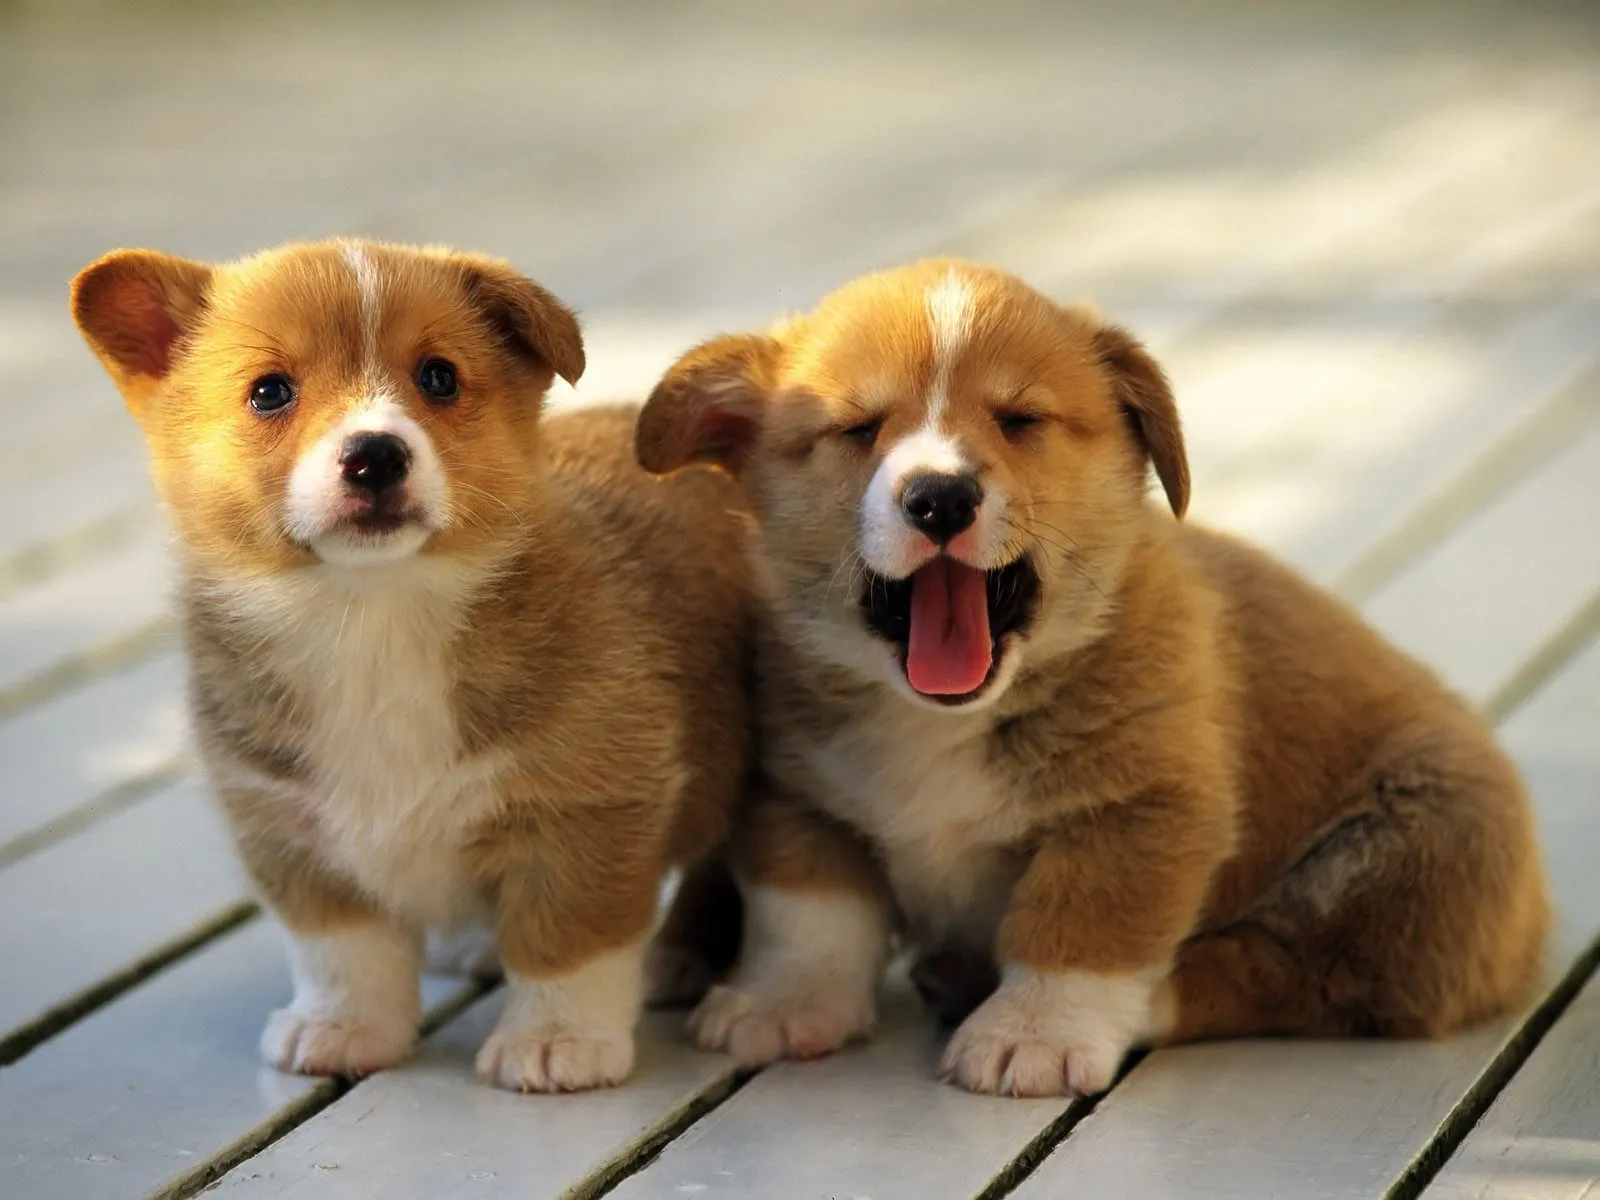 Banco de Imagenes Gratis .Com: Un par de perritos muy bonitos - Little ...